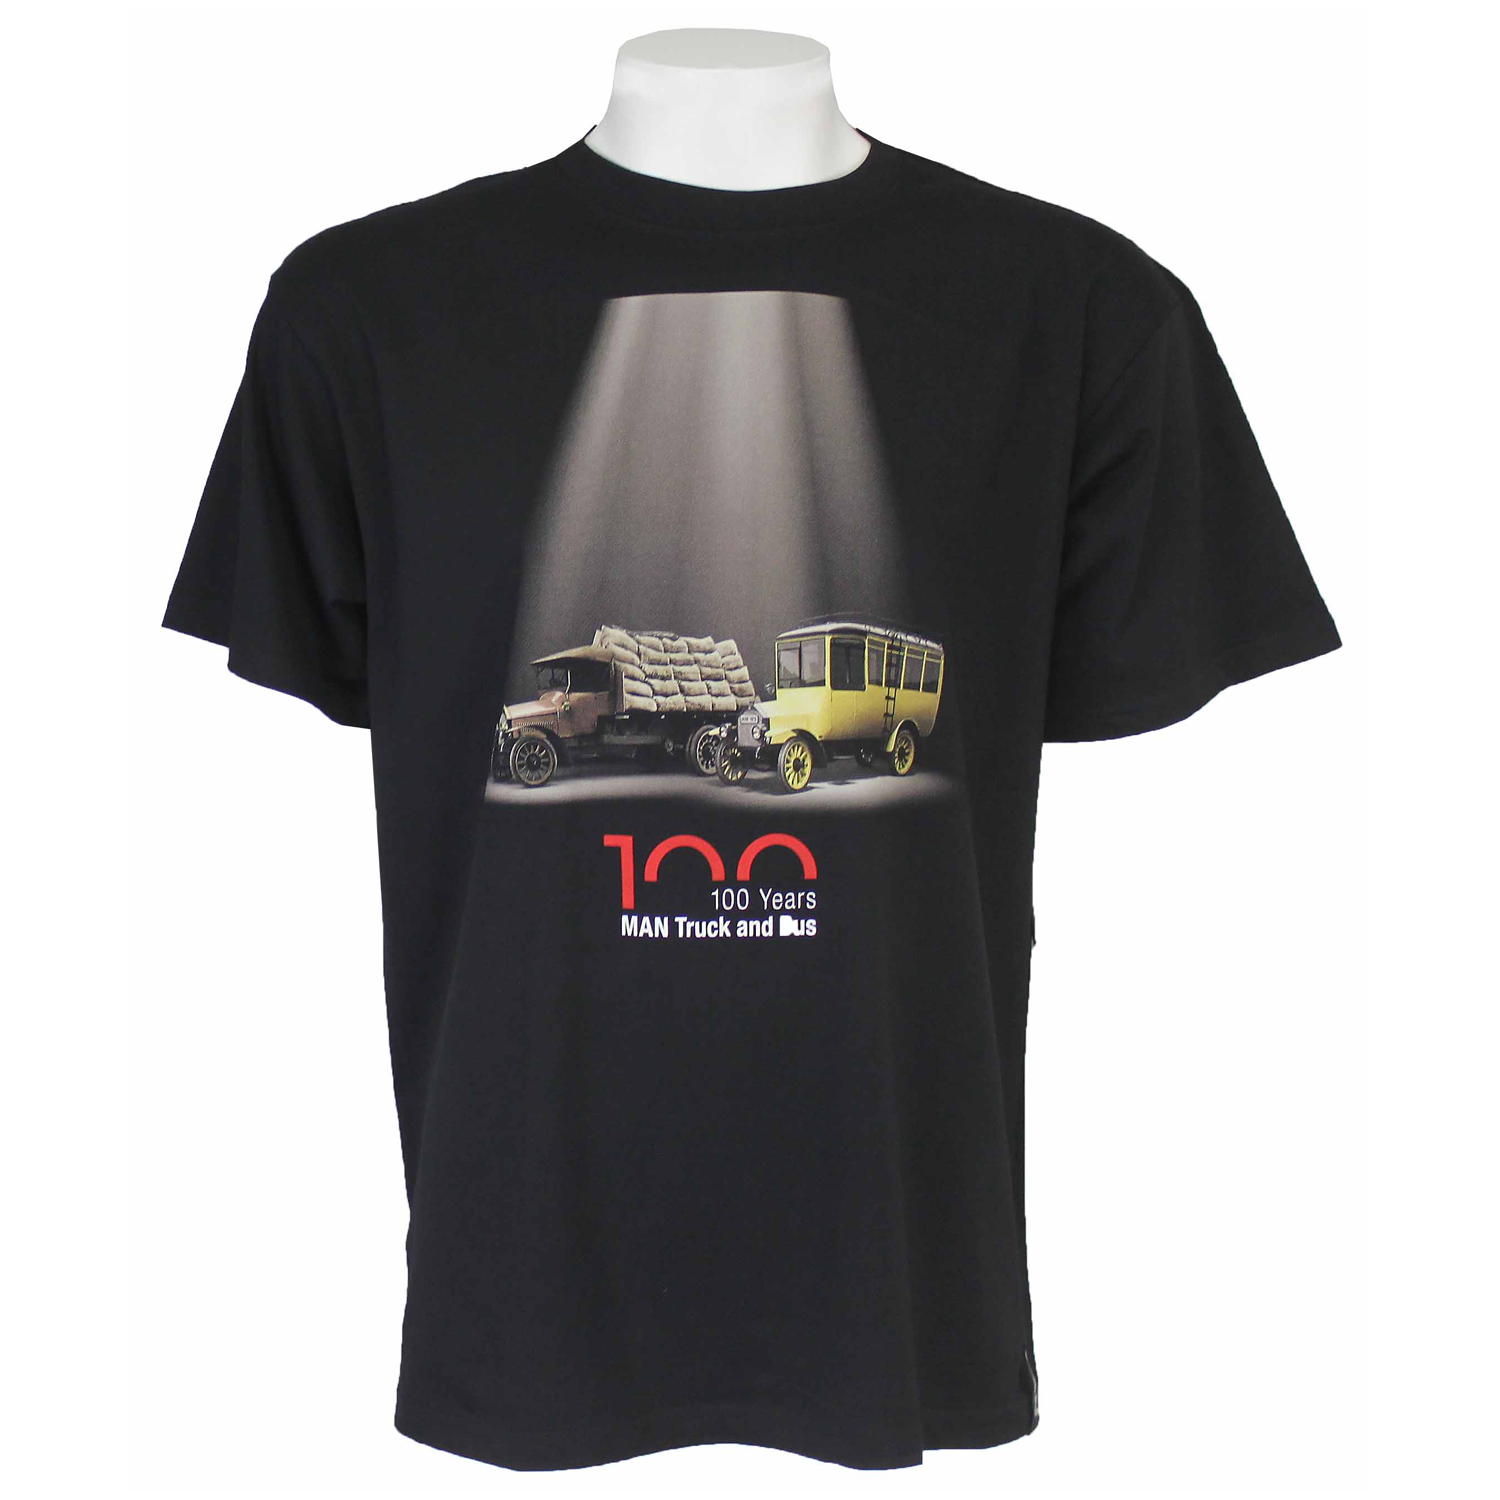 MAN Ladies' T-shirt "100 years MAN Truck and Bus"